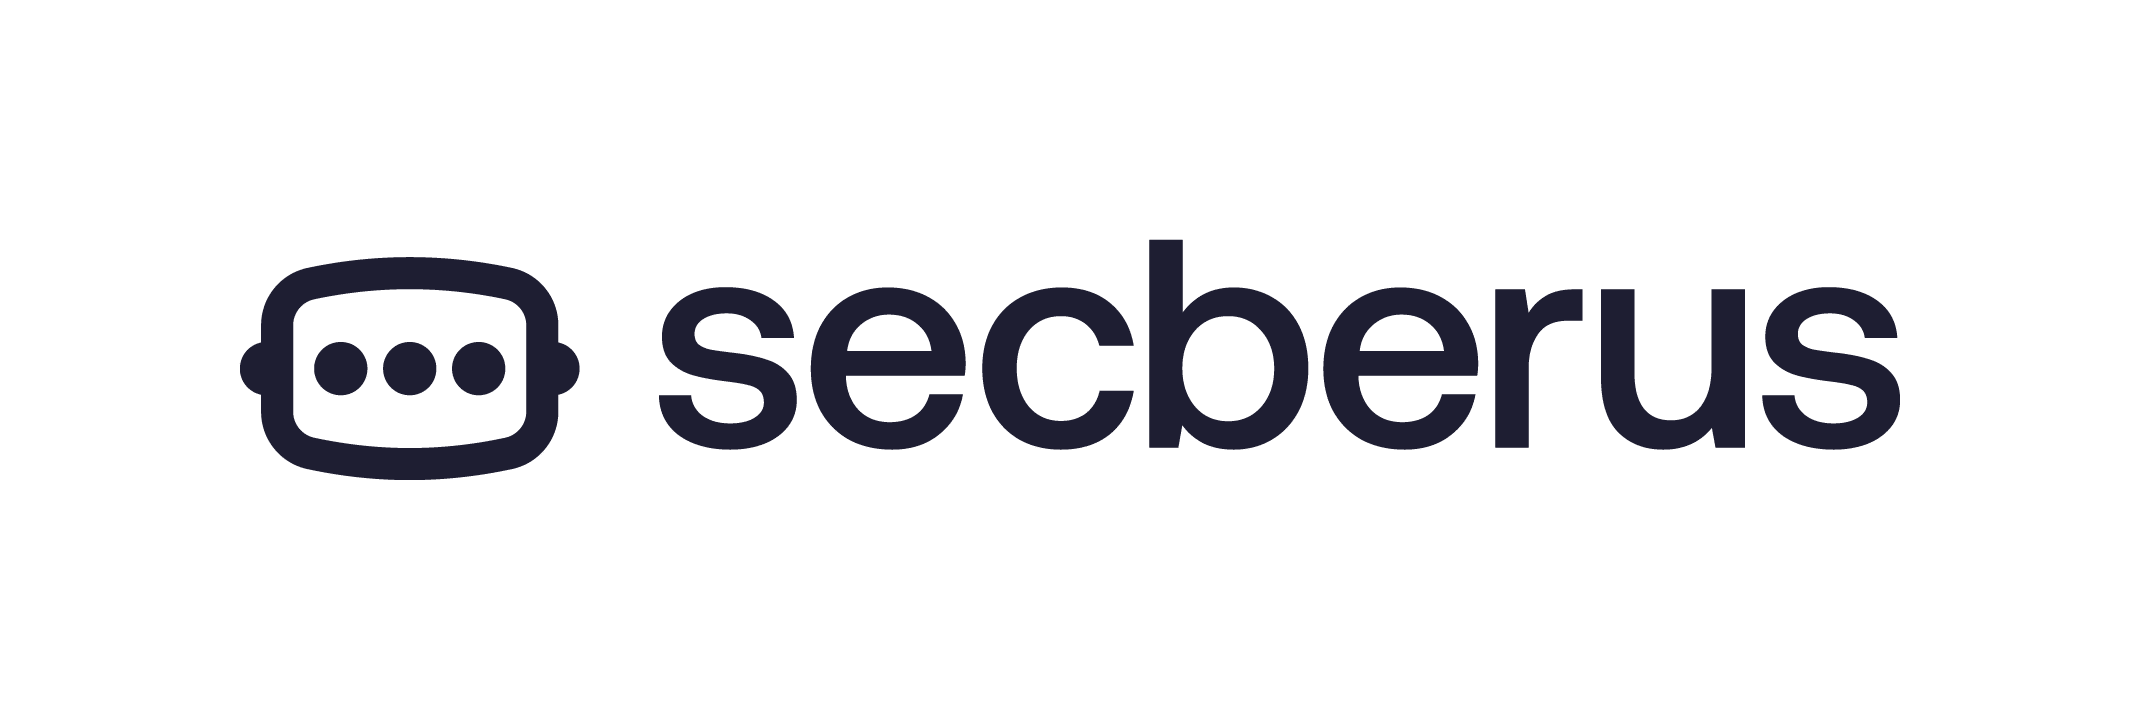 secberus logo dark@2x